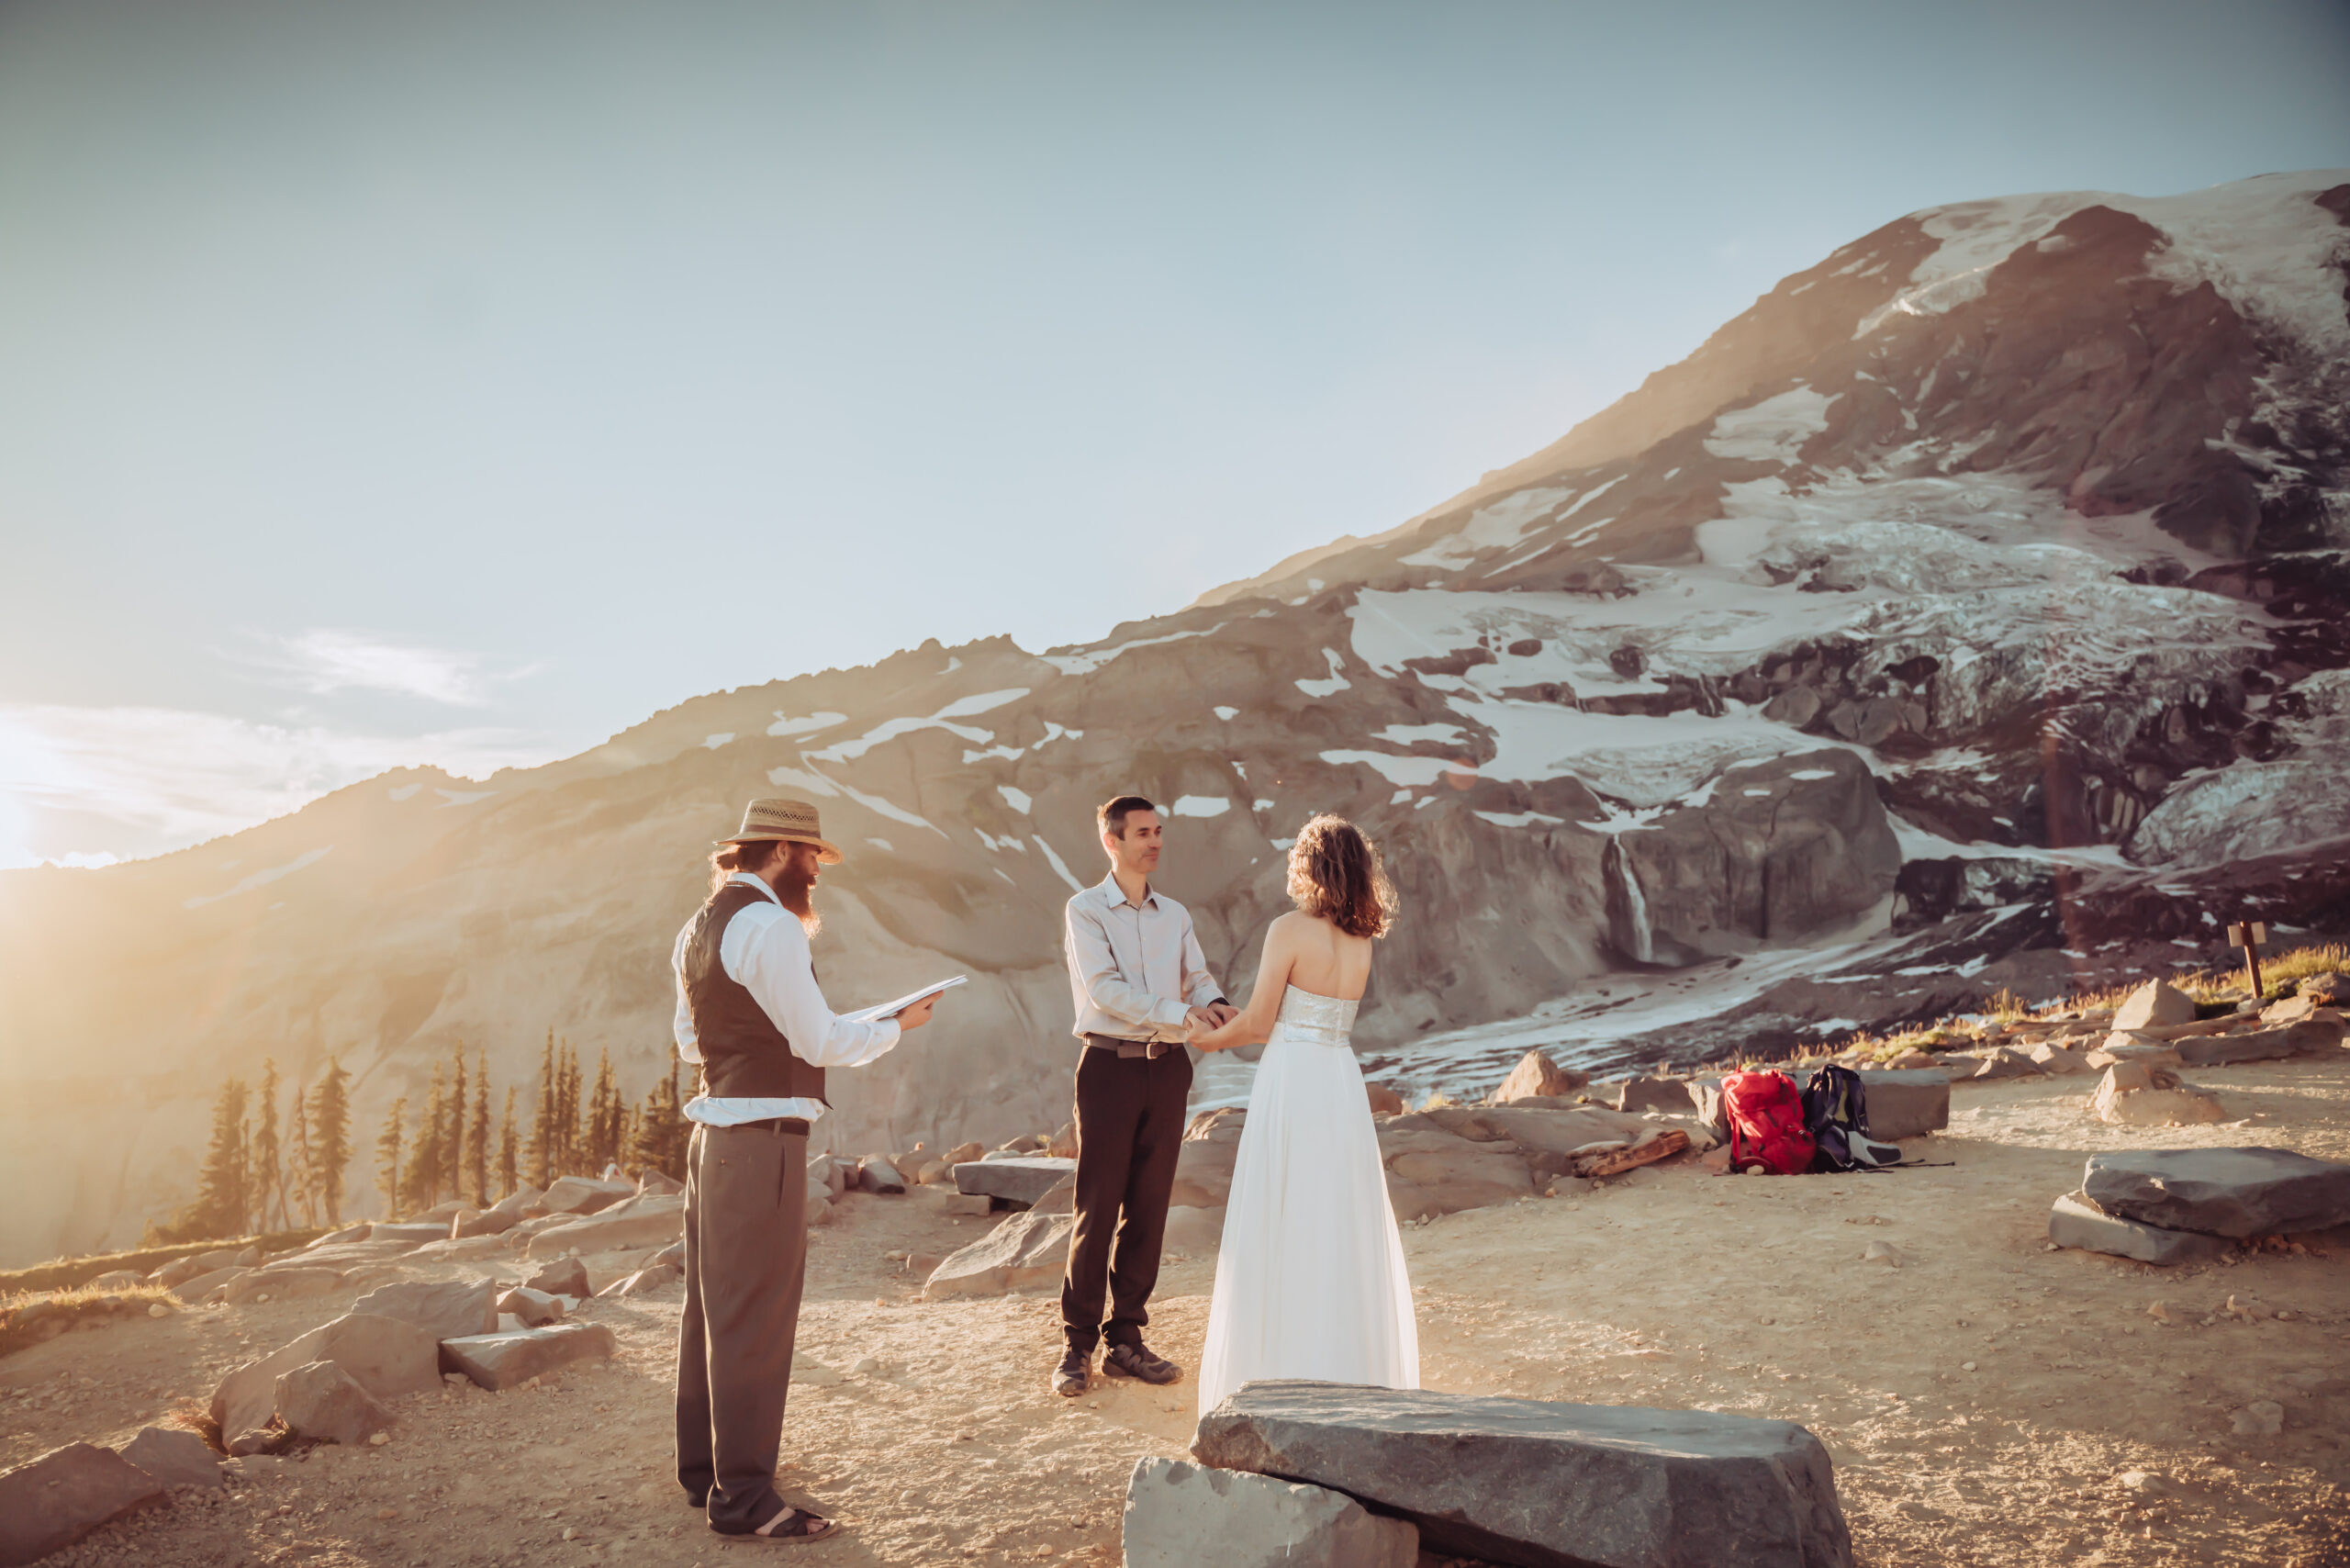 A elopement ceremony during sunset overlooking Mount Rainier